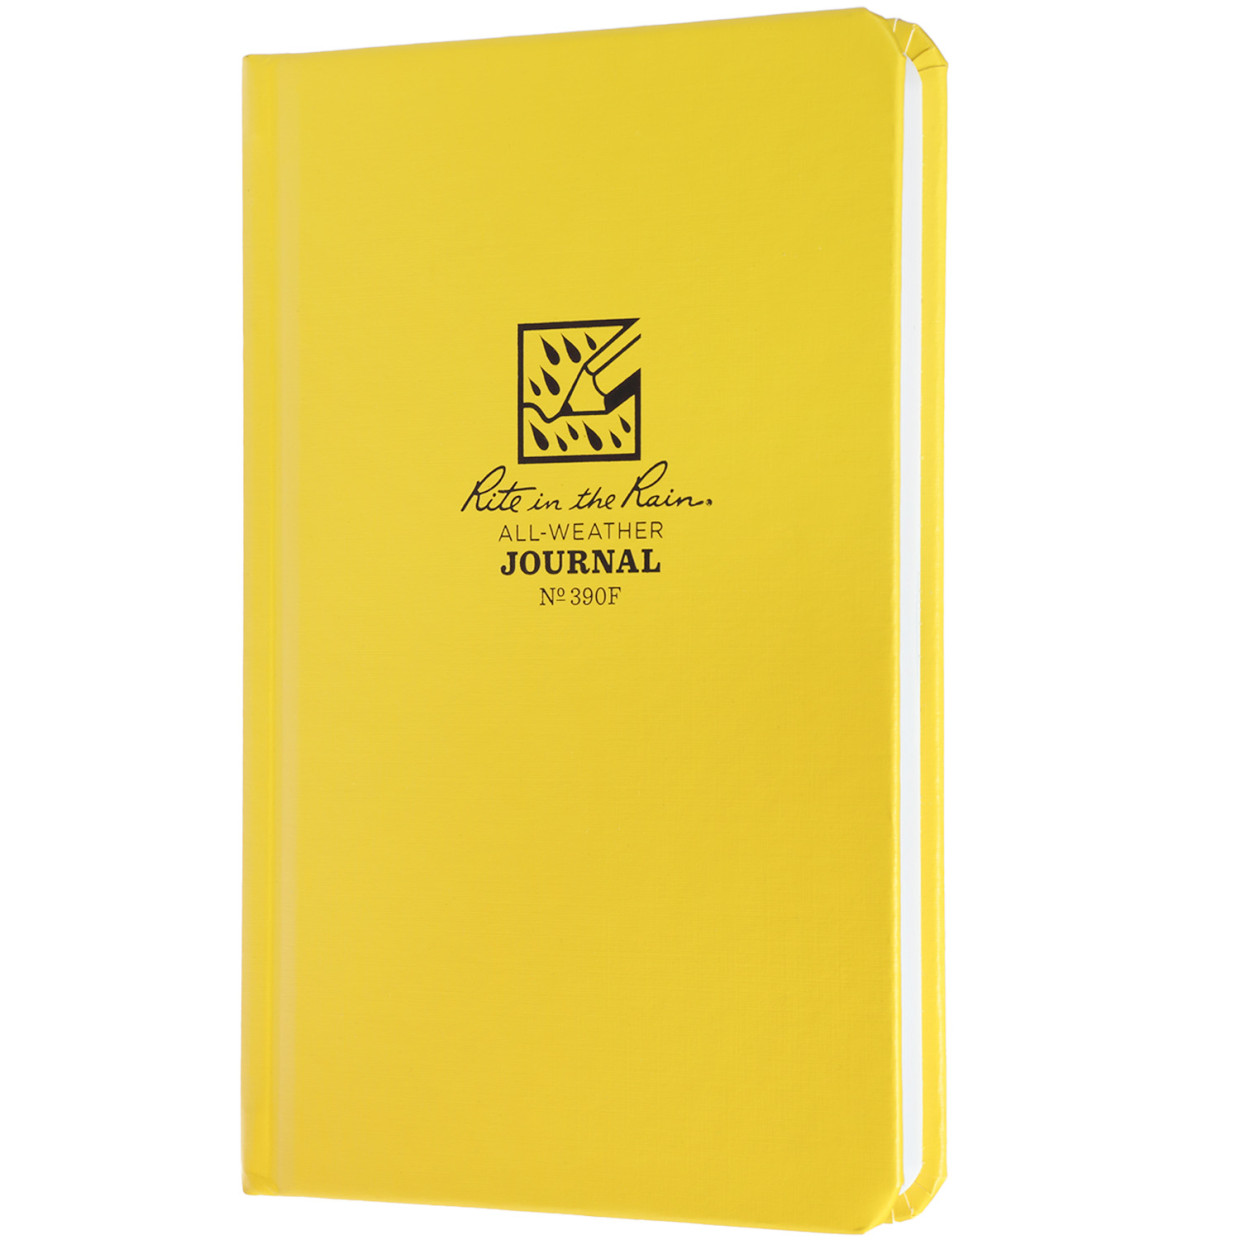 Waterproof notebook – Bound Book